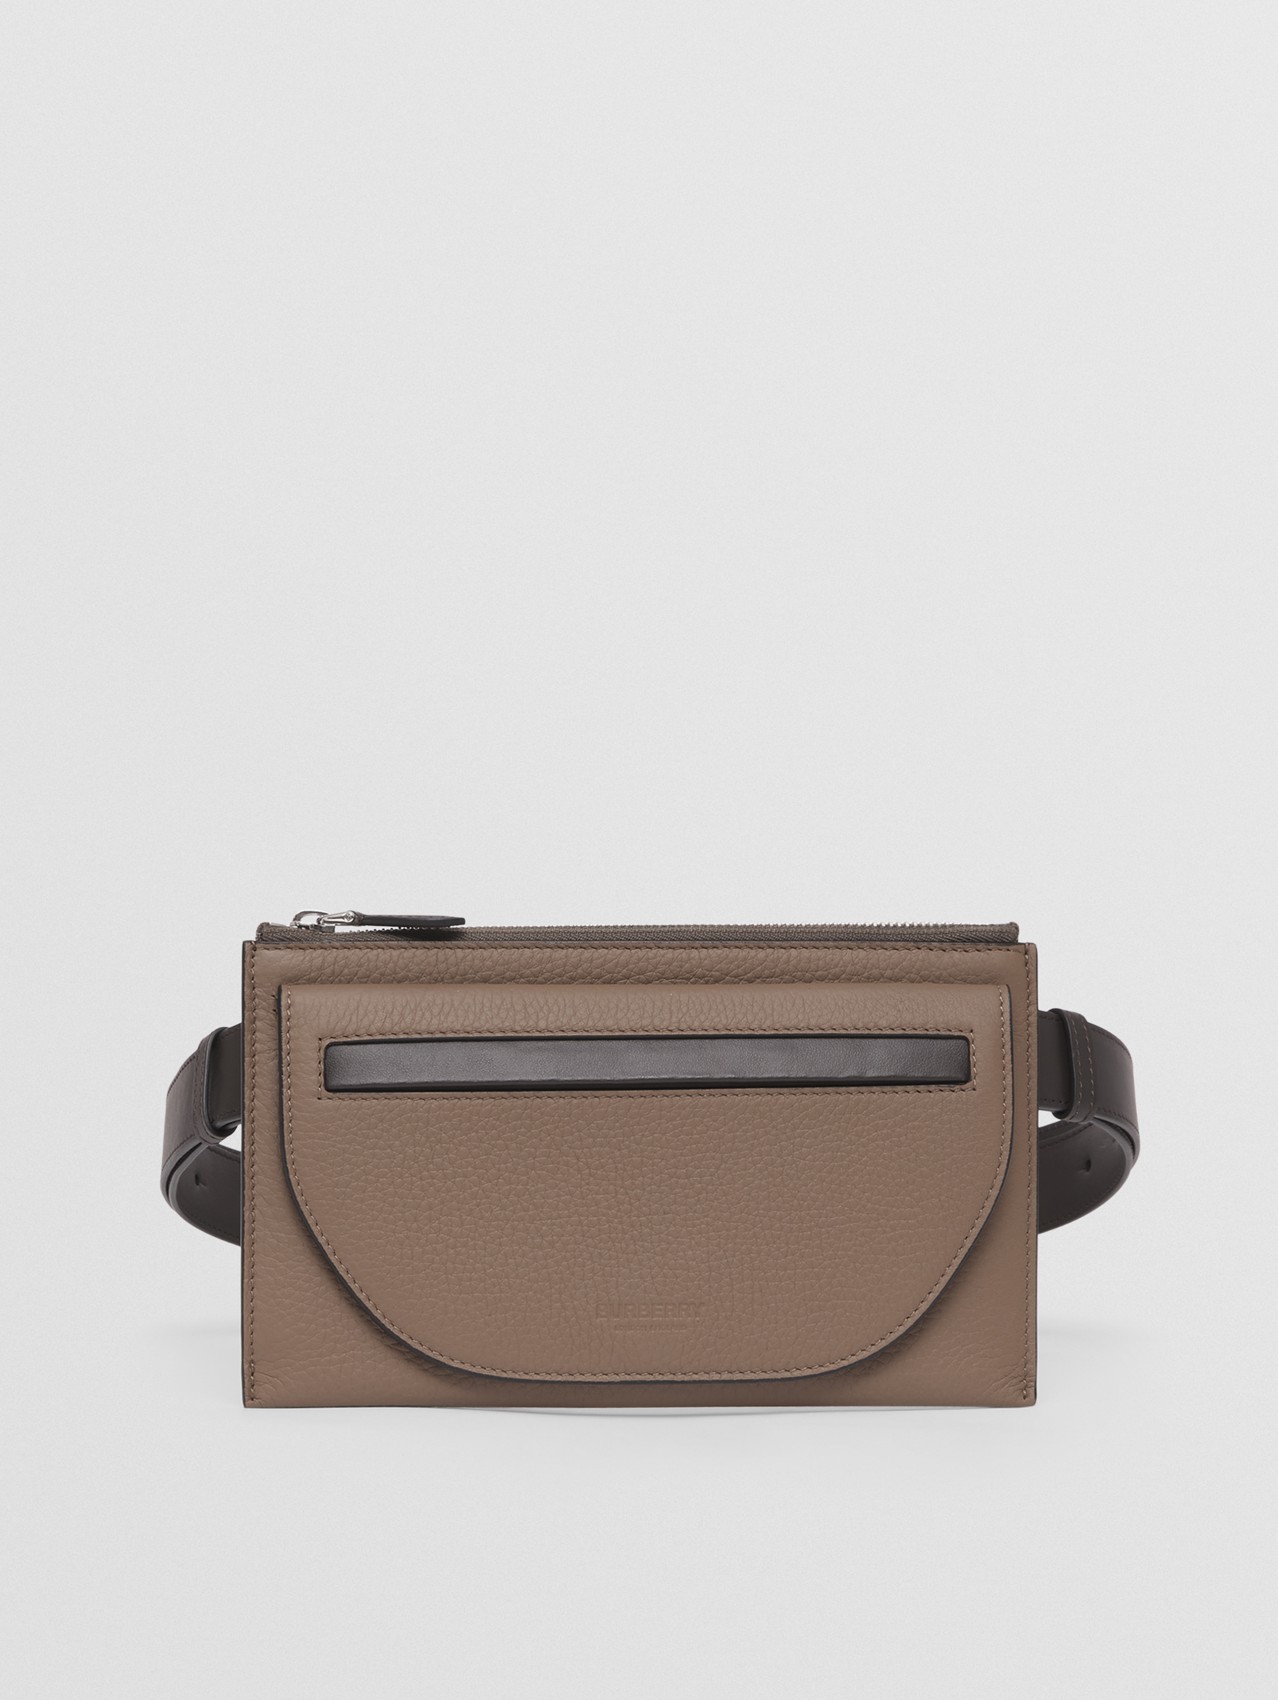 Two-tone Leather Olympia Belt Bag in Light Acorn/tan